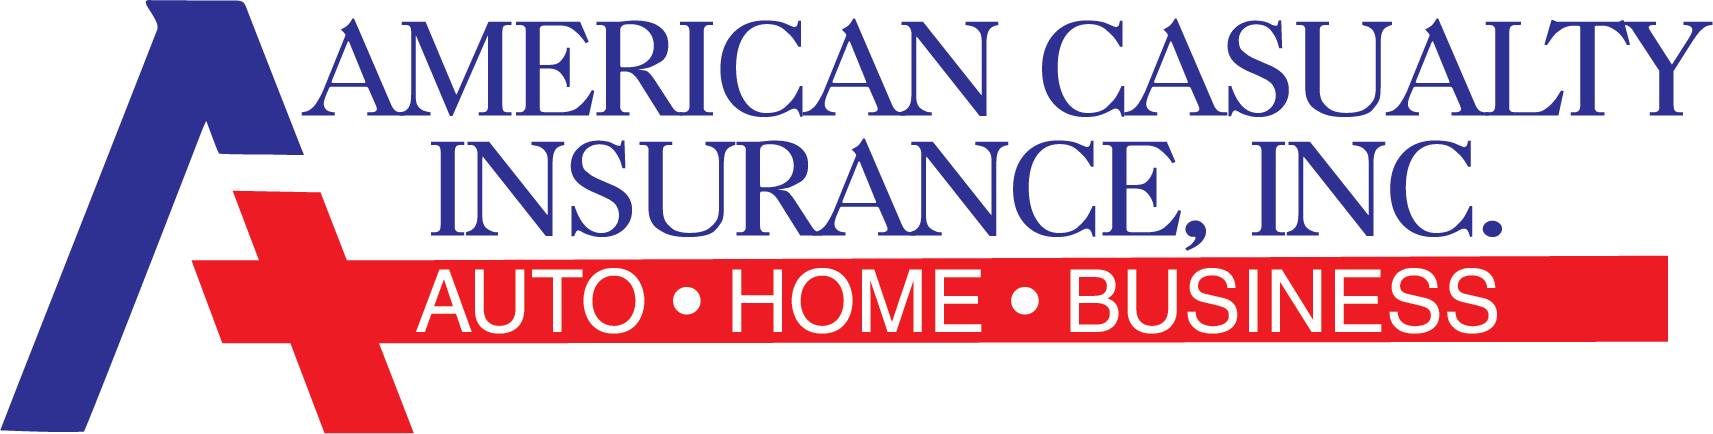 American Casualty Insurance Inc